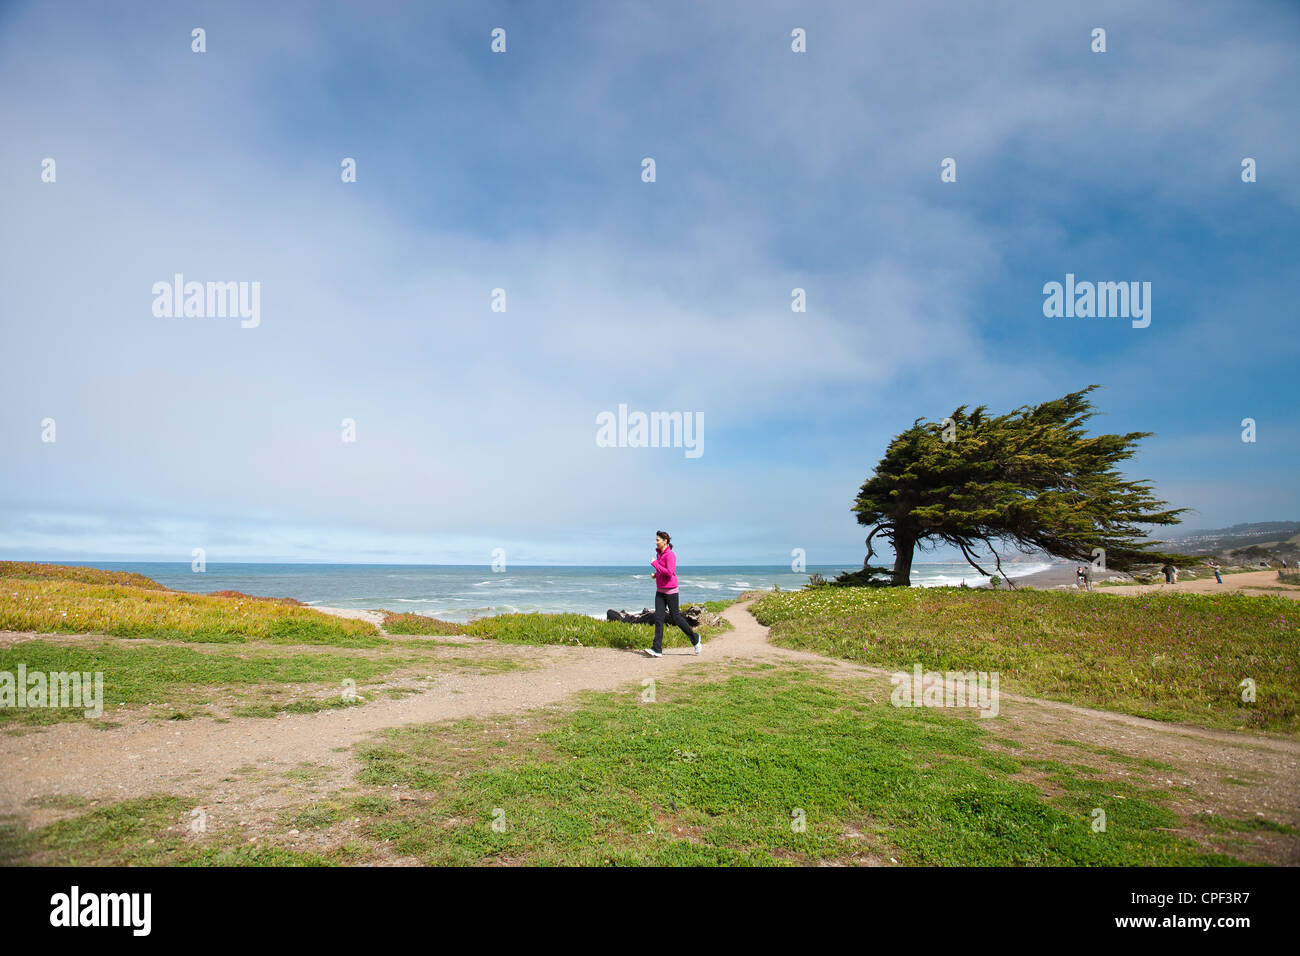 Jogging at beach Stock Photo